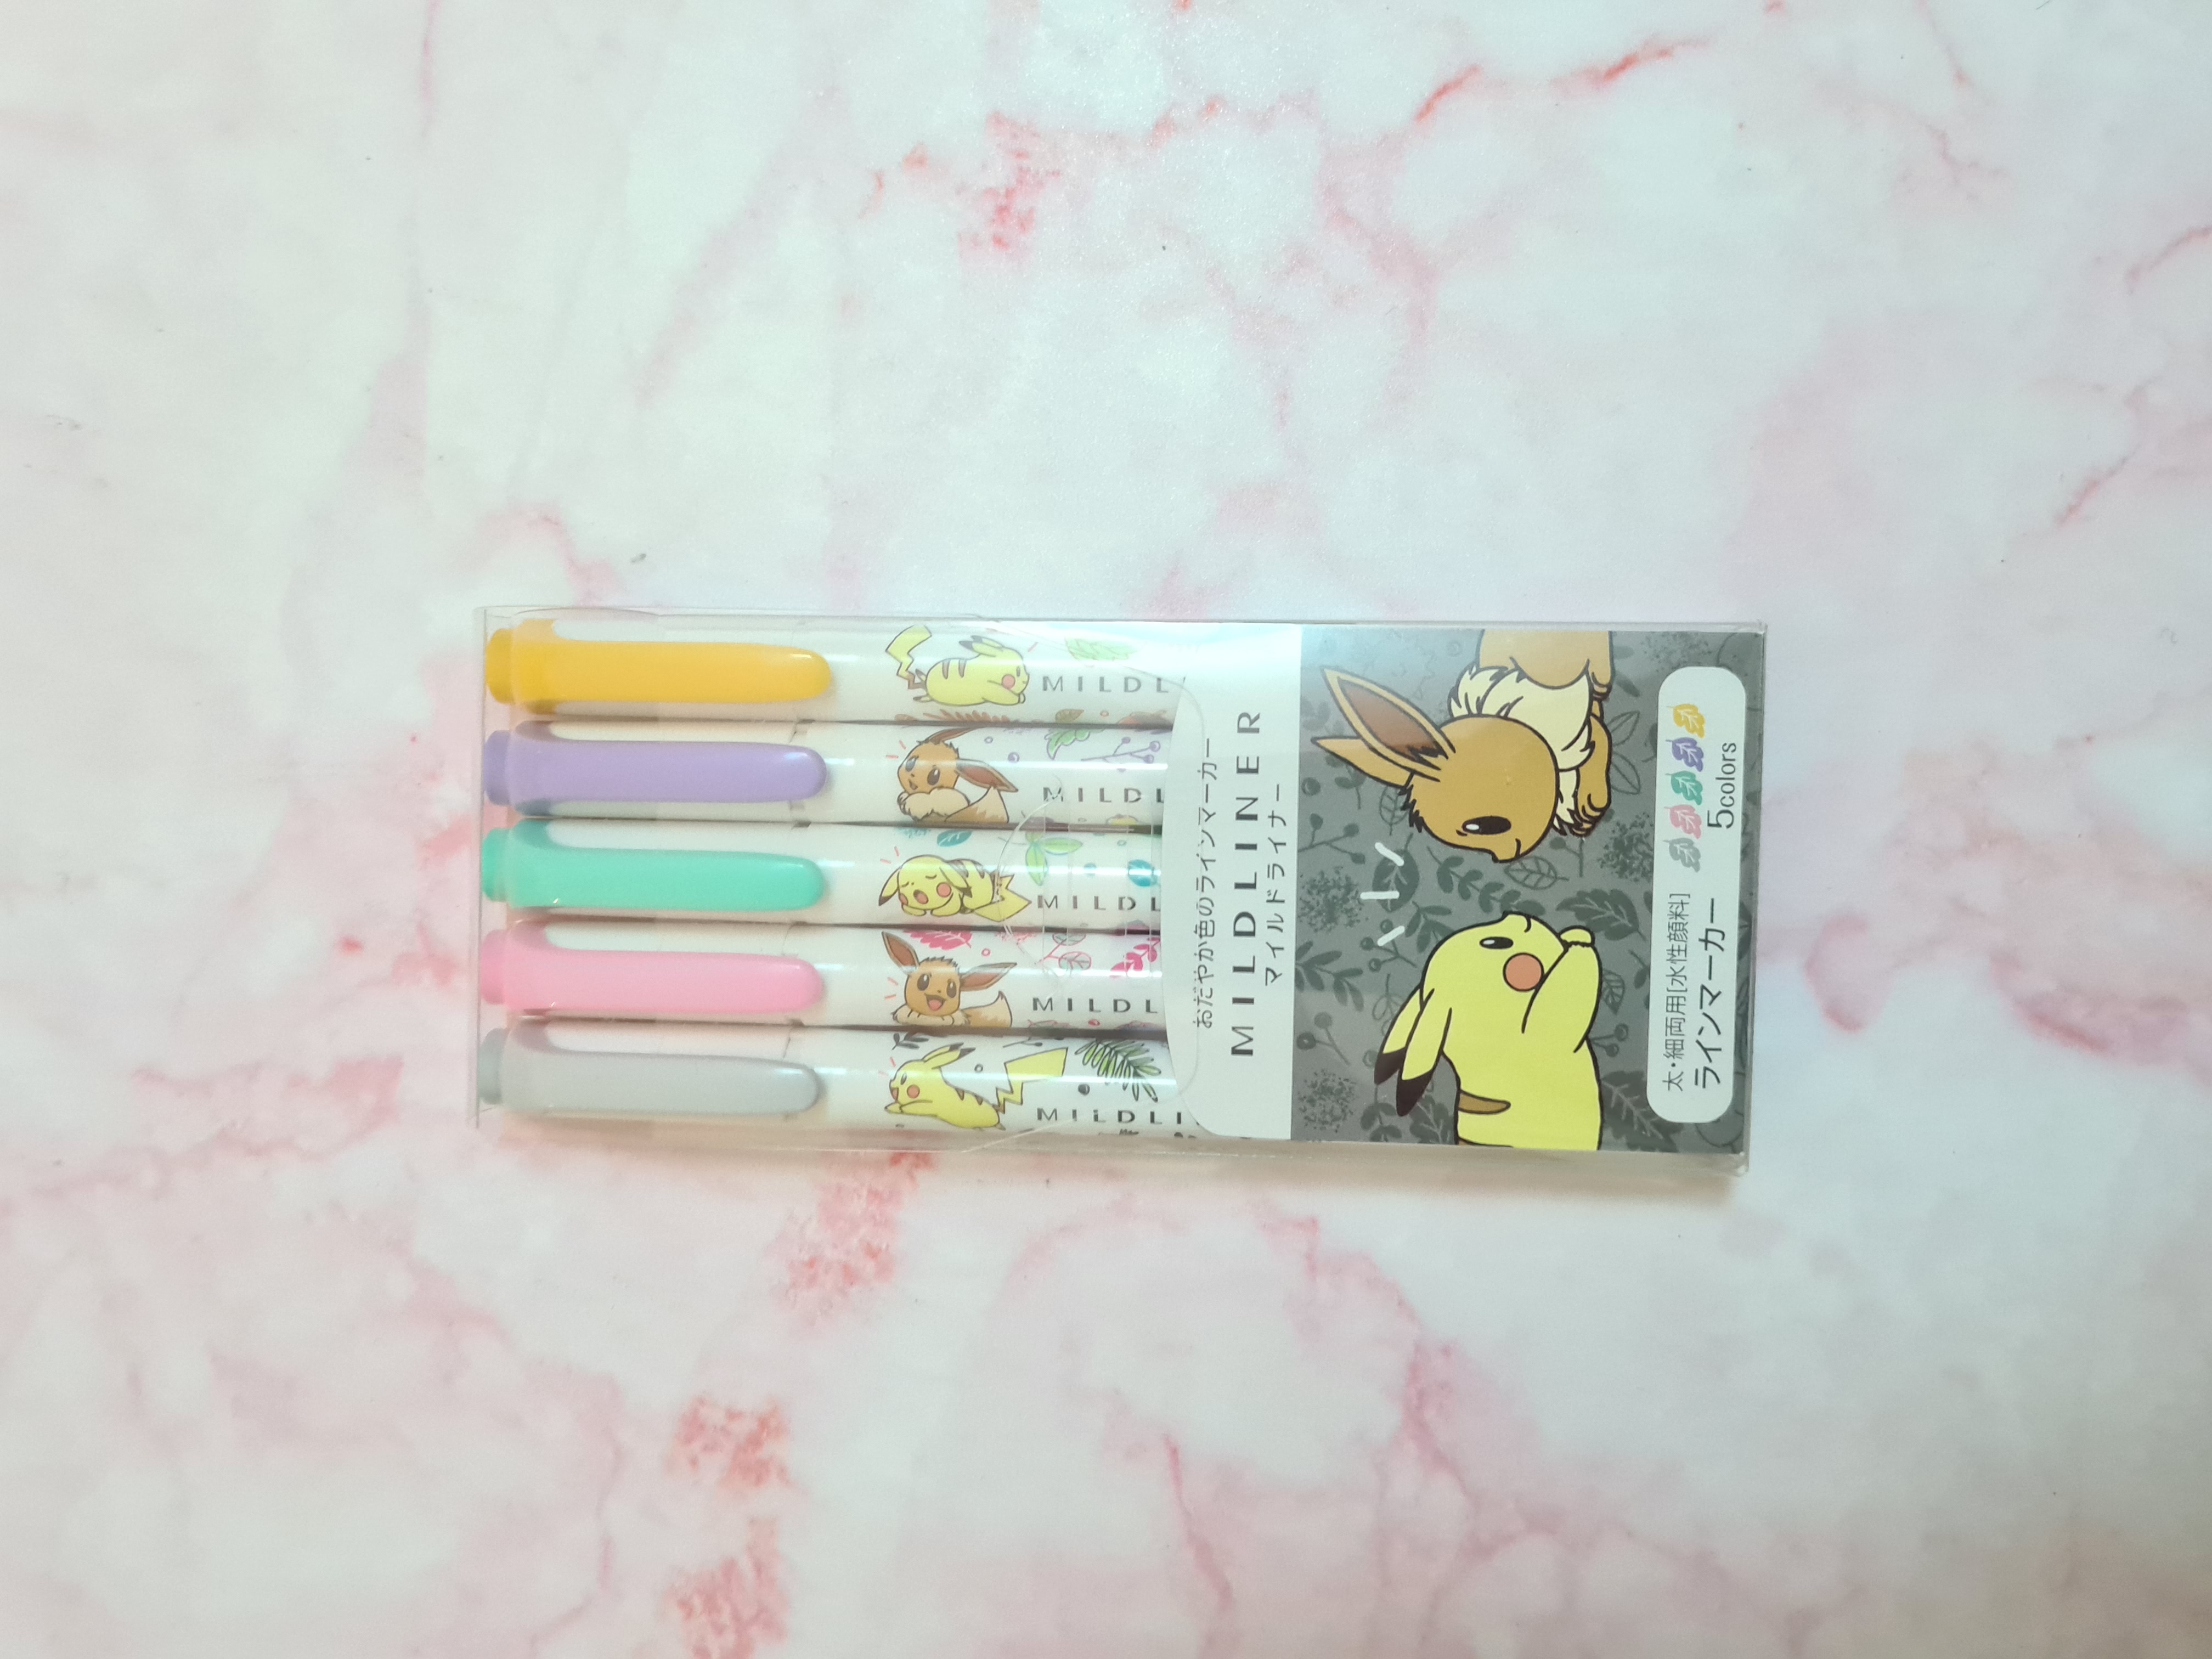 Set 5 mildliner pikachu-evee